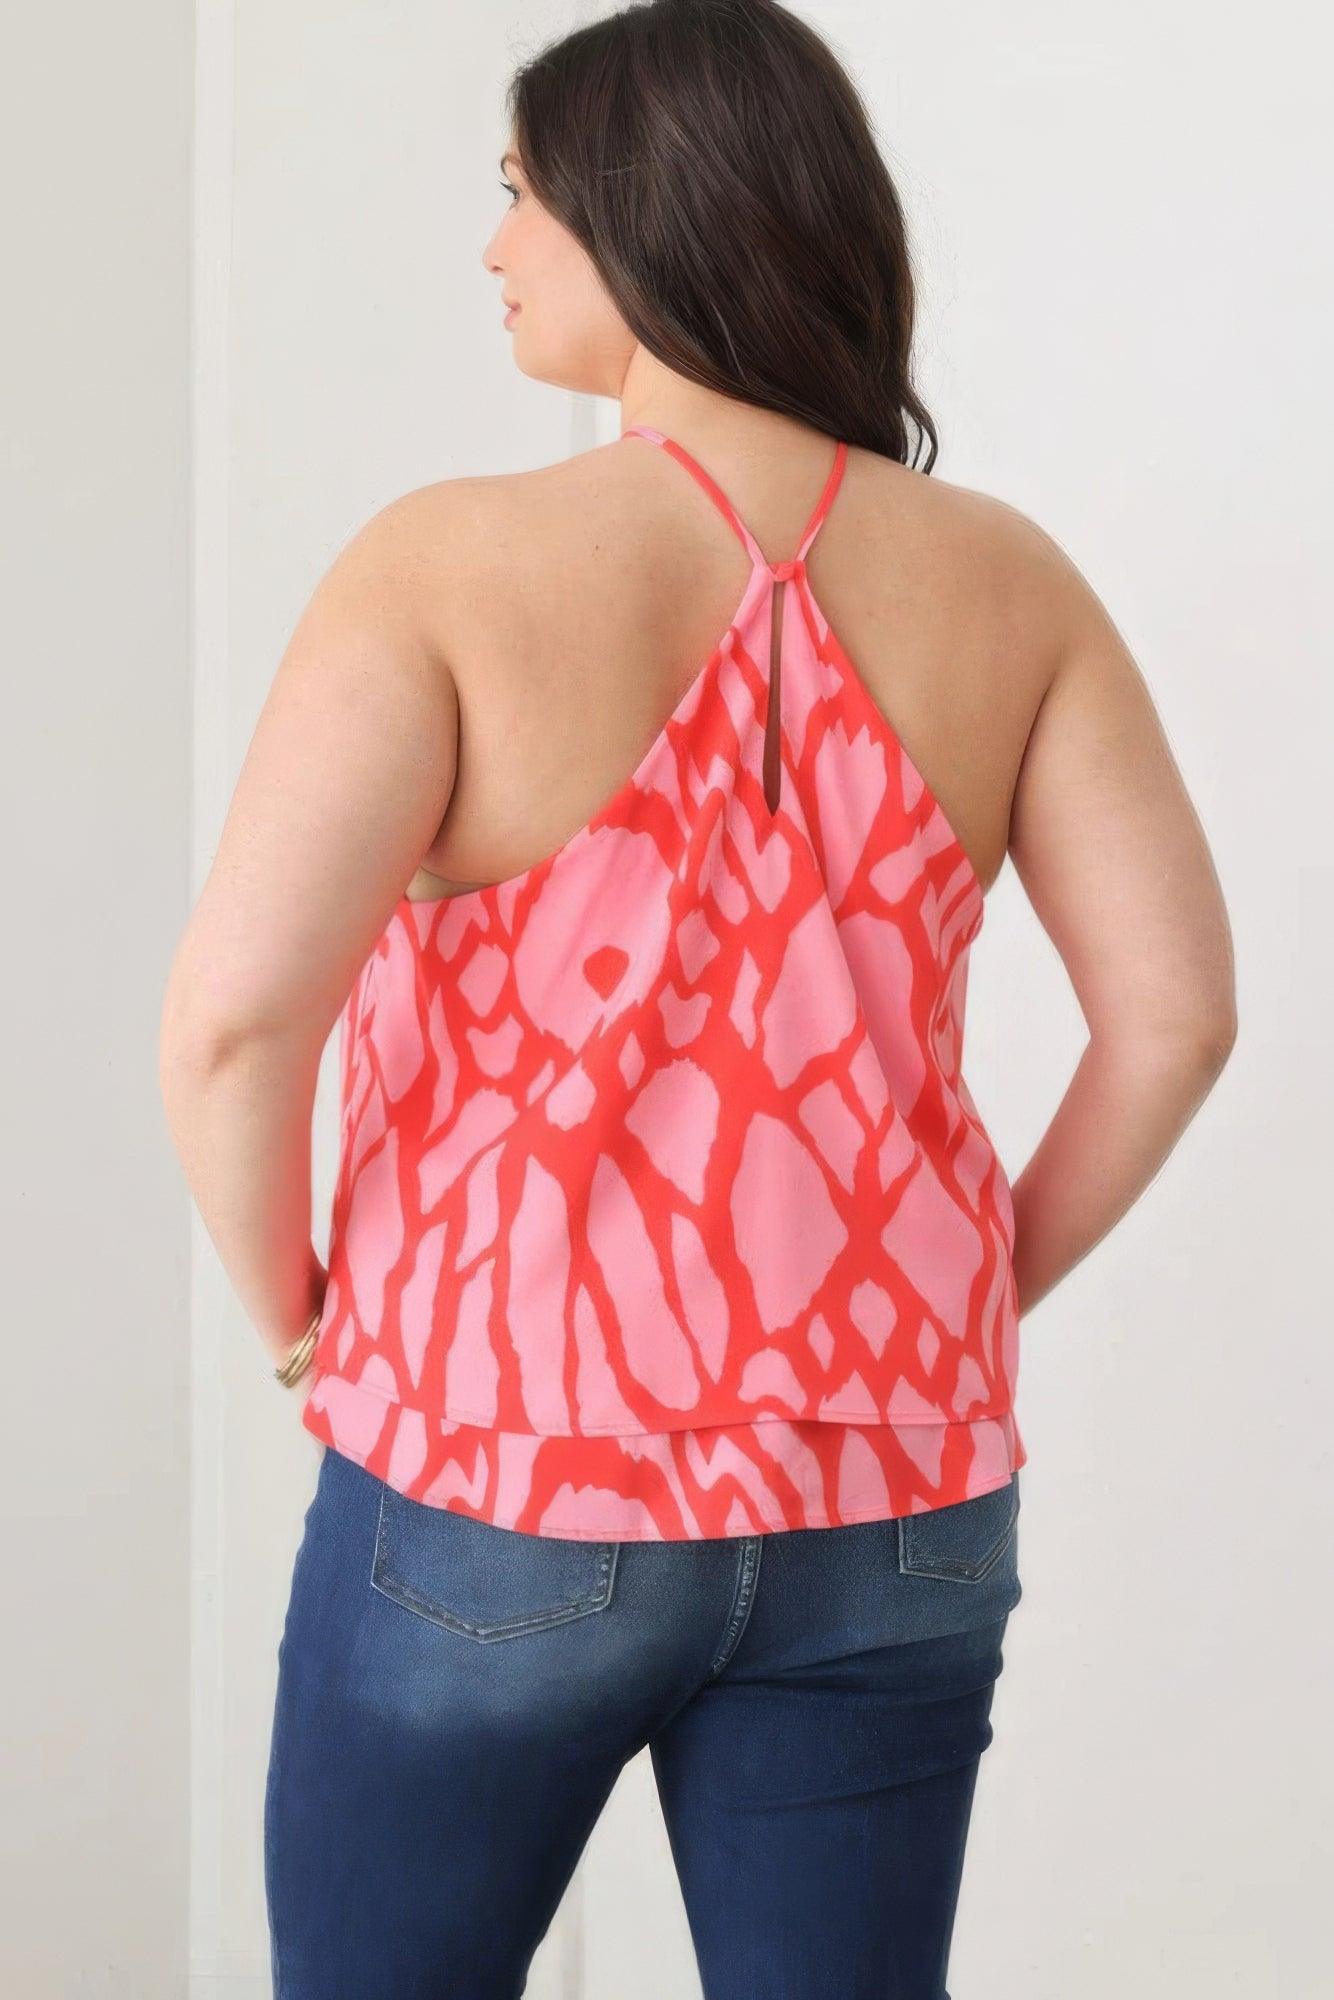 Women's Shirts - Tank Tops Plus Size Abstract Print Halter Ruffle Hem Top